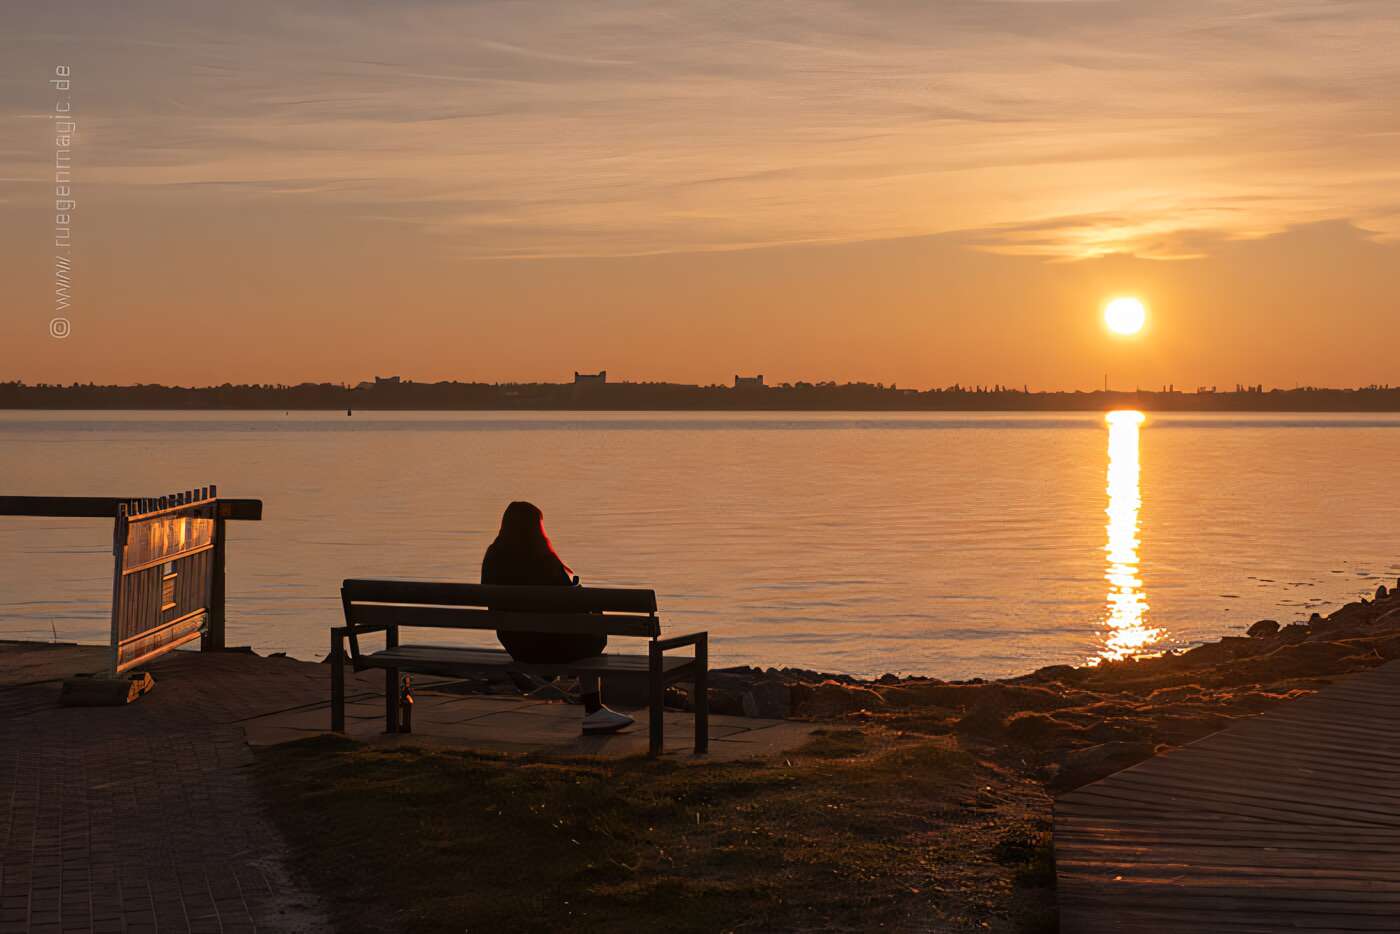 Sonnenuntergang am Strelasund